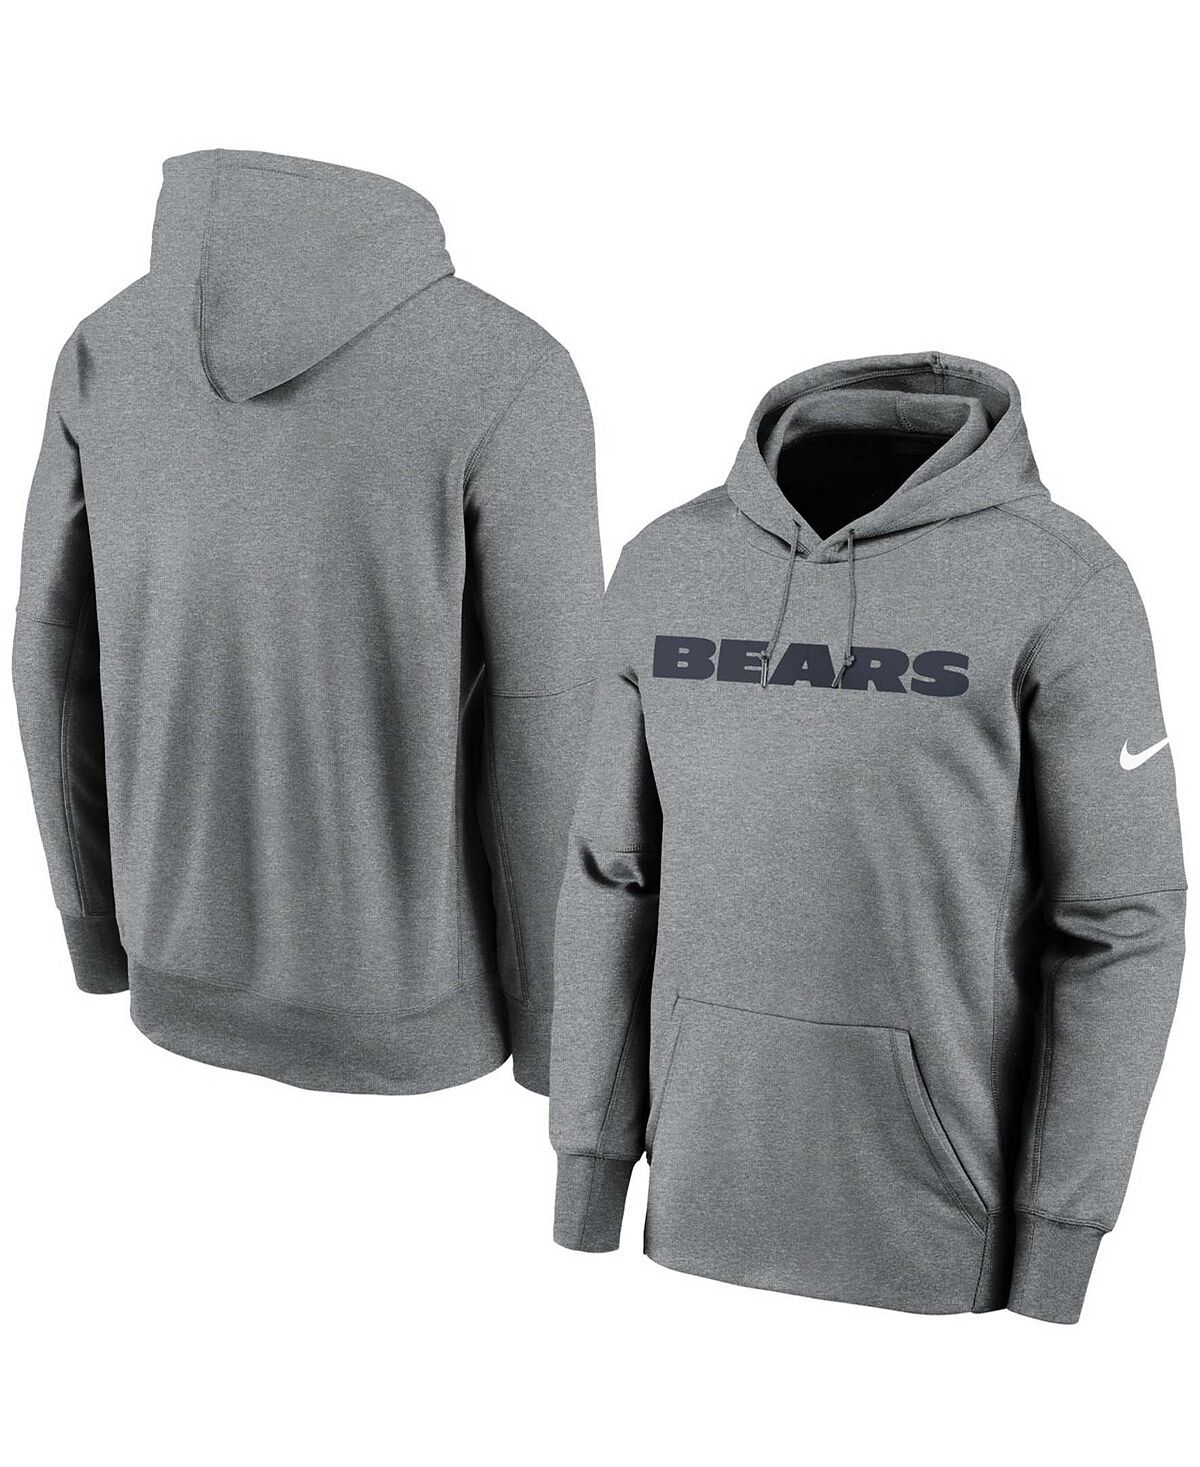 Мужской темно-серый пуловер с капюшоном Chicago Bears с надписью Therma Performance Nike